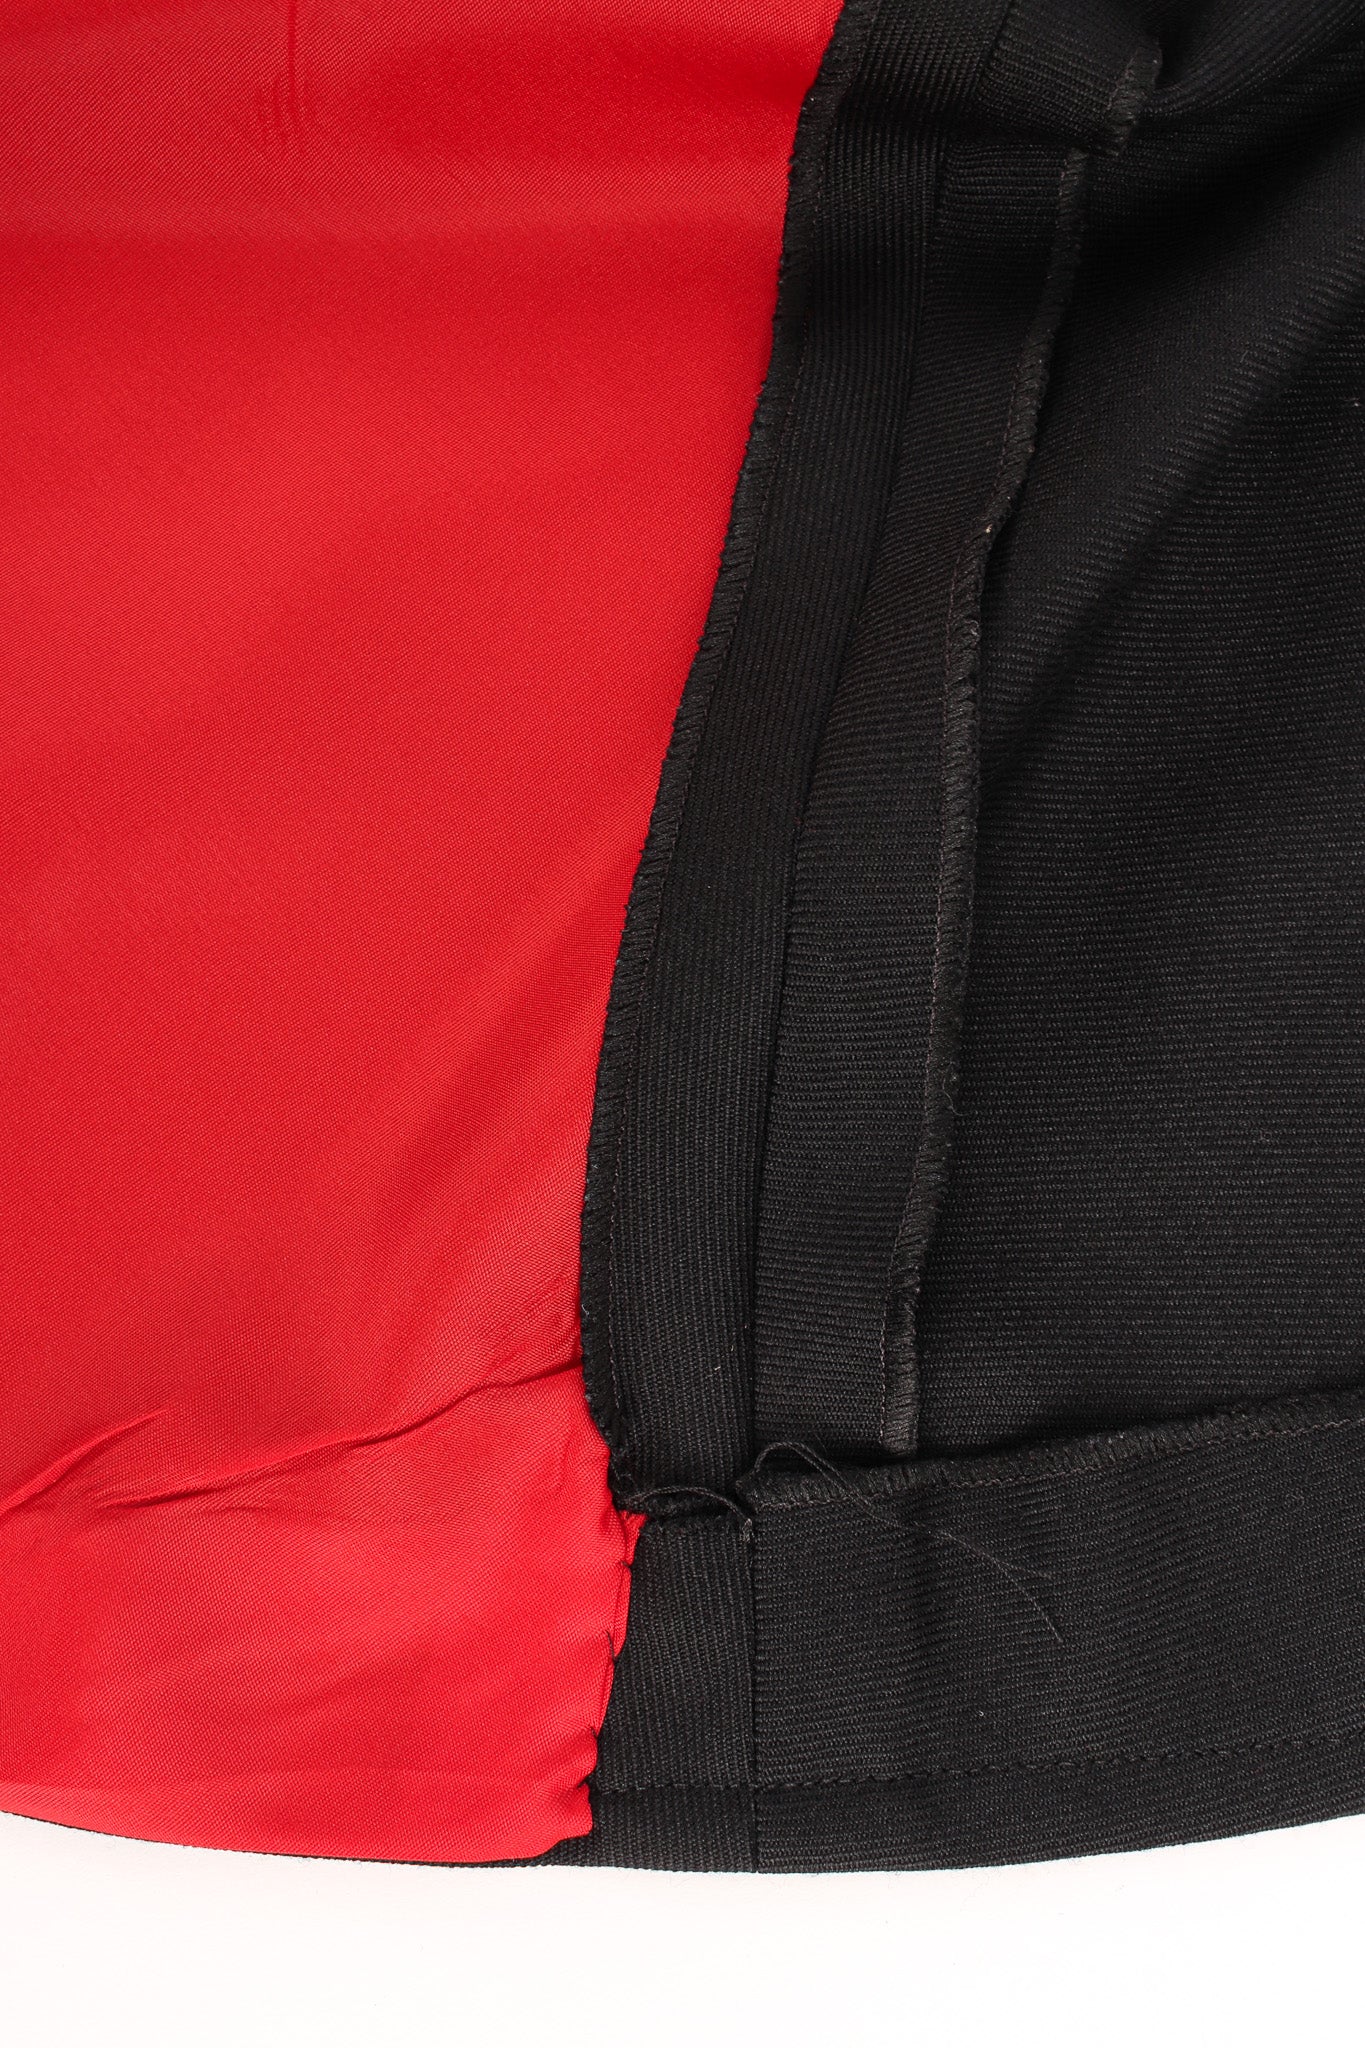 Vintage Zomar Artesania Flamenco Jacket & Skirt Wool Set skirt red lining @ Recess LA